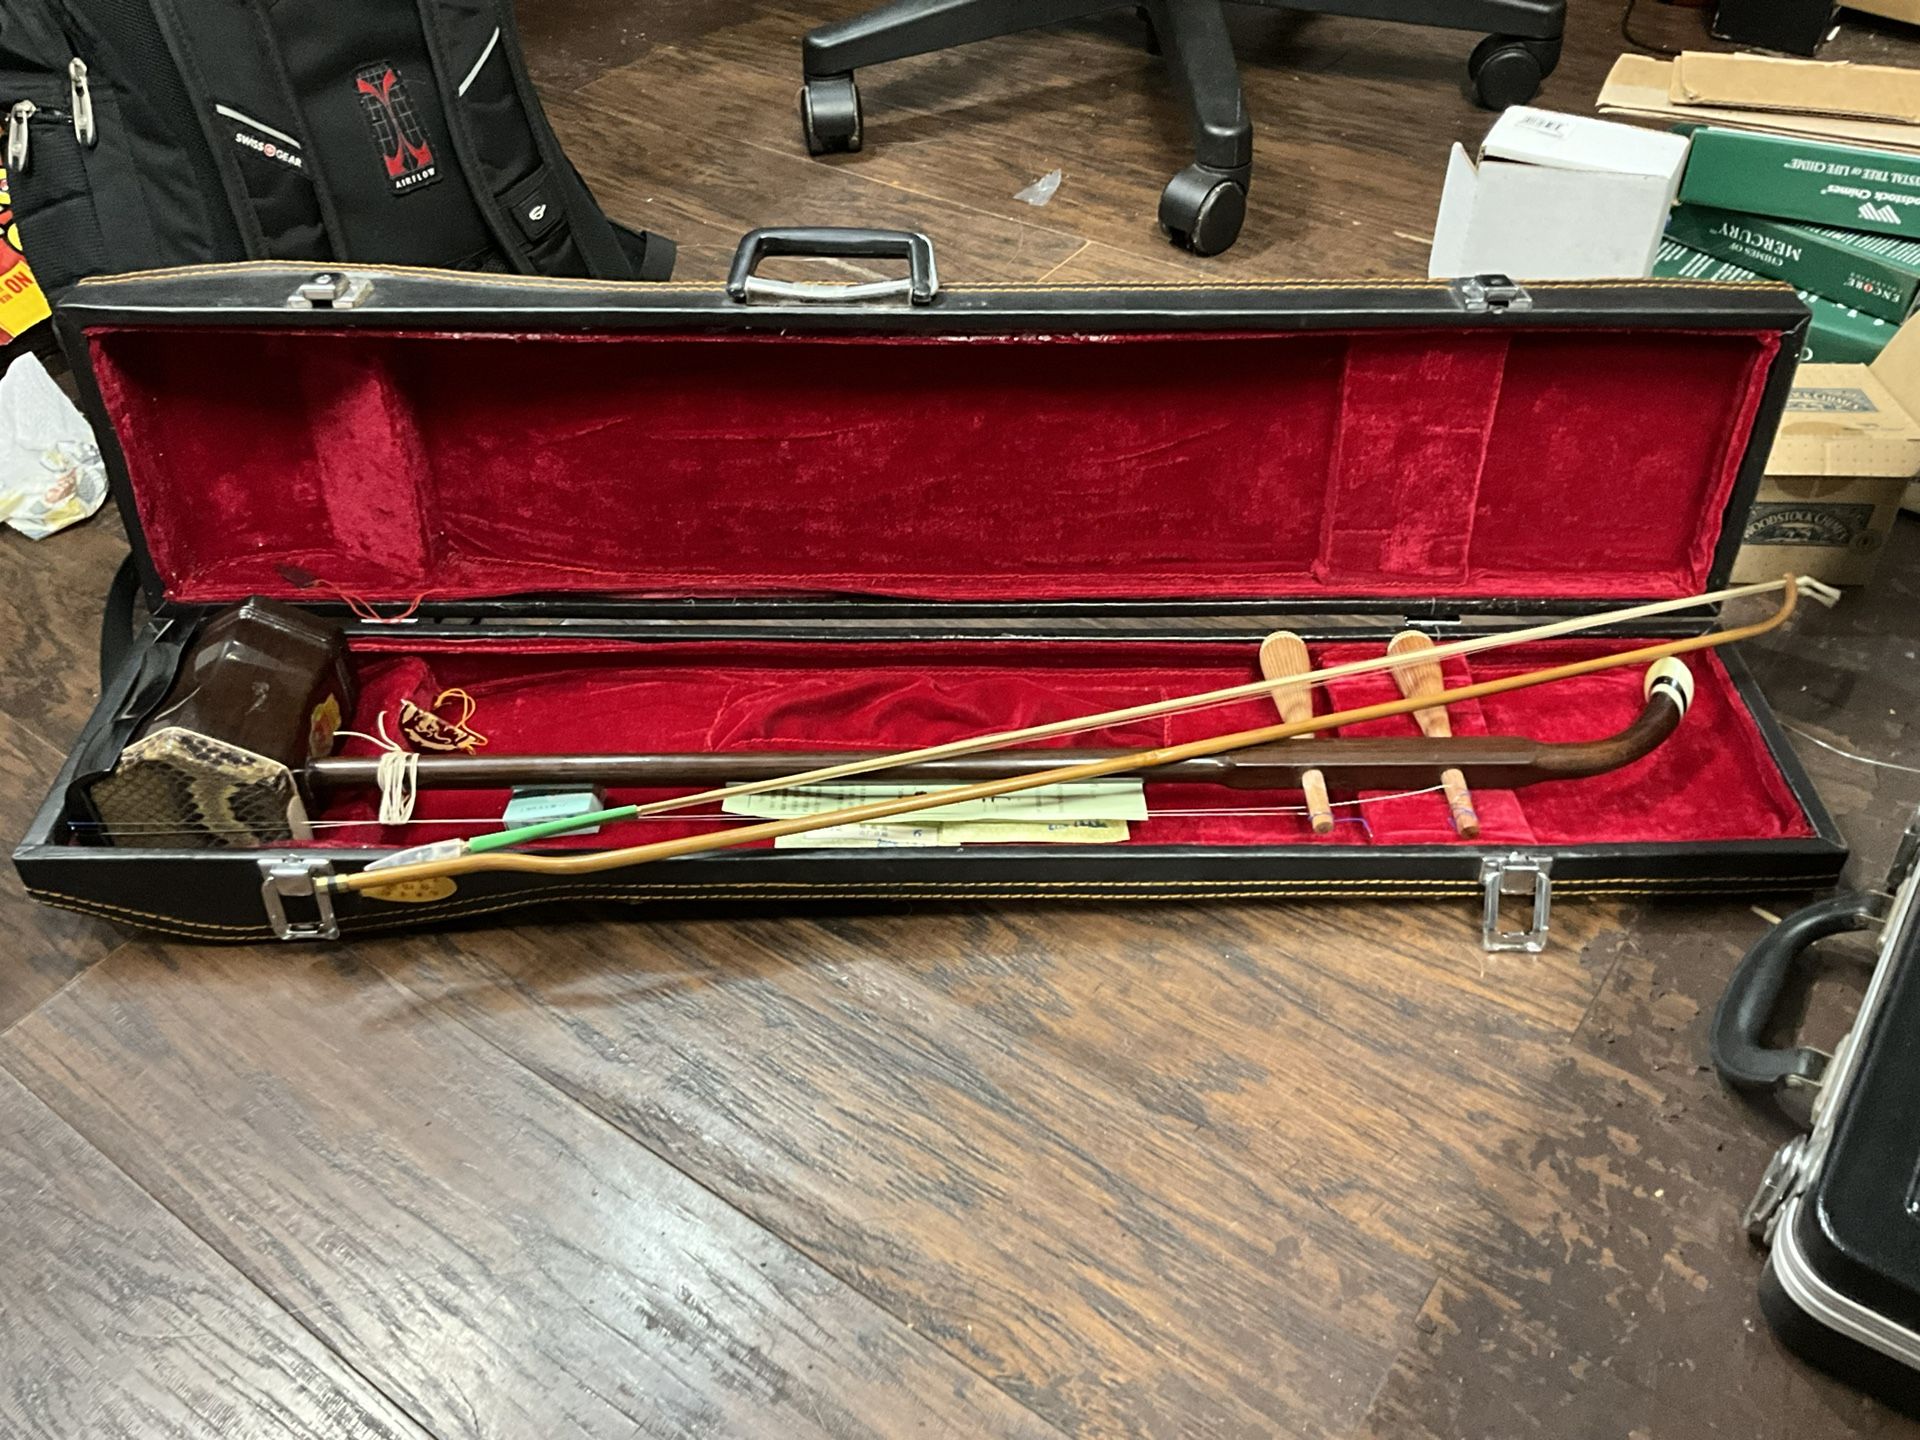 Erhu (Chinese violin) w/ Hardshell case 